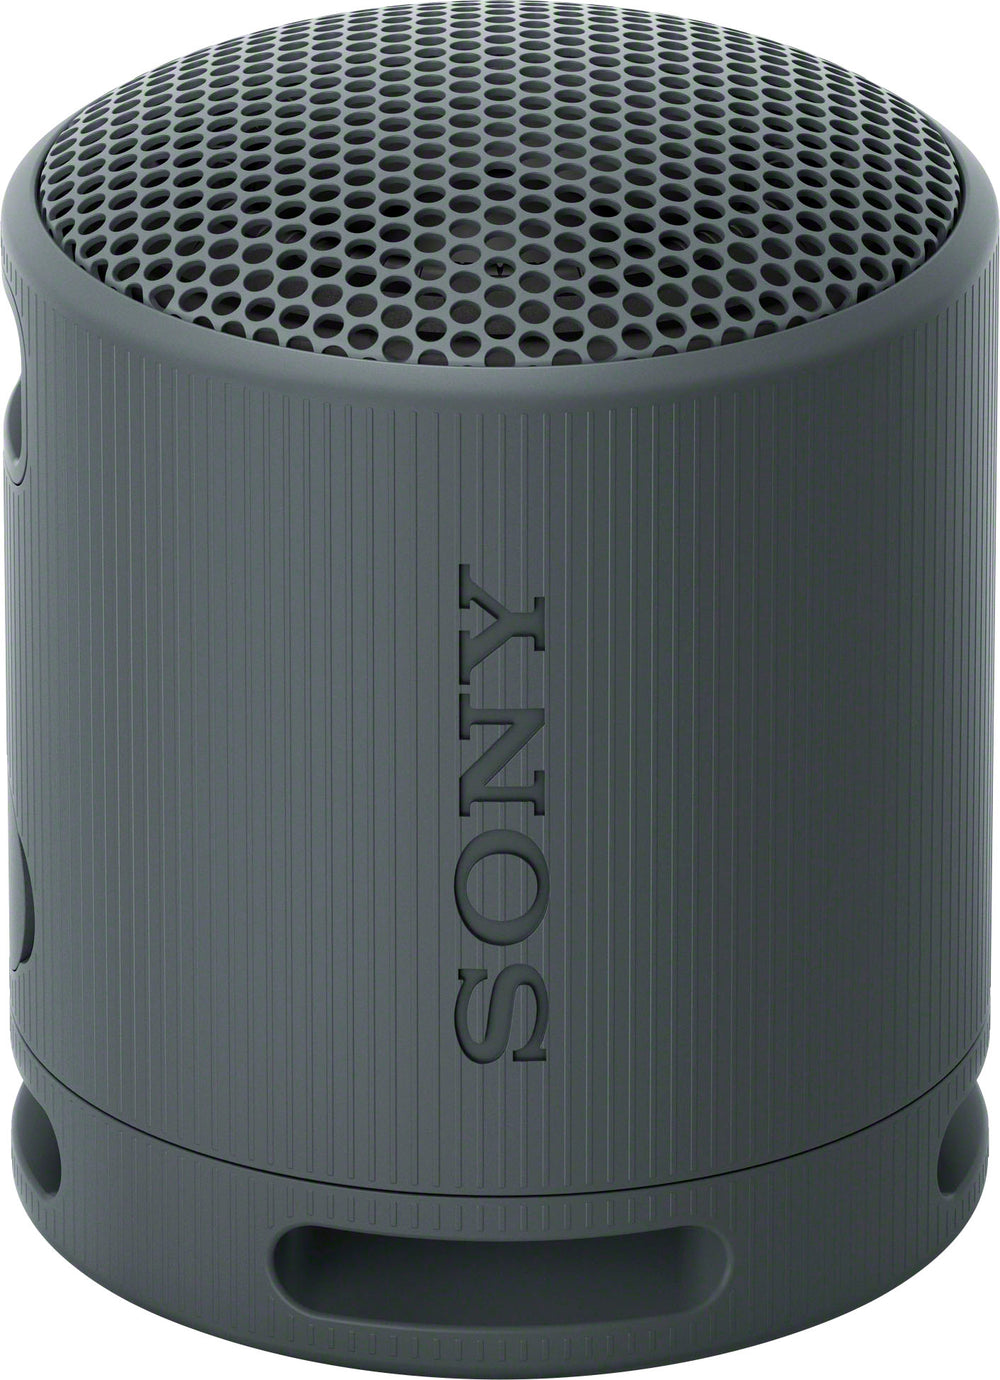 Sony - XB100 Compact Bluetooth Speaker - Black_1